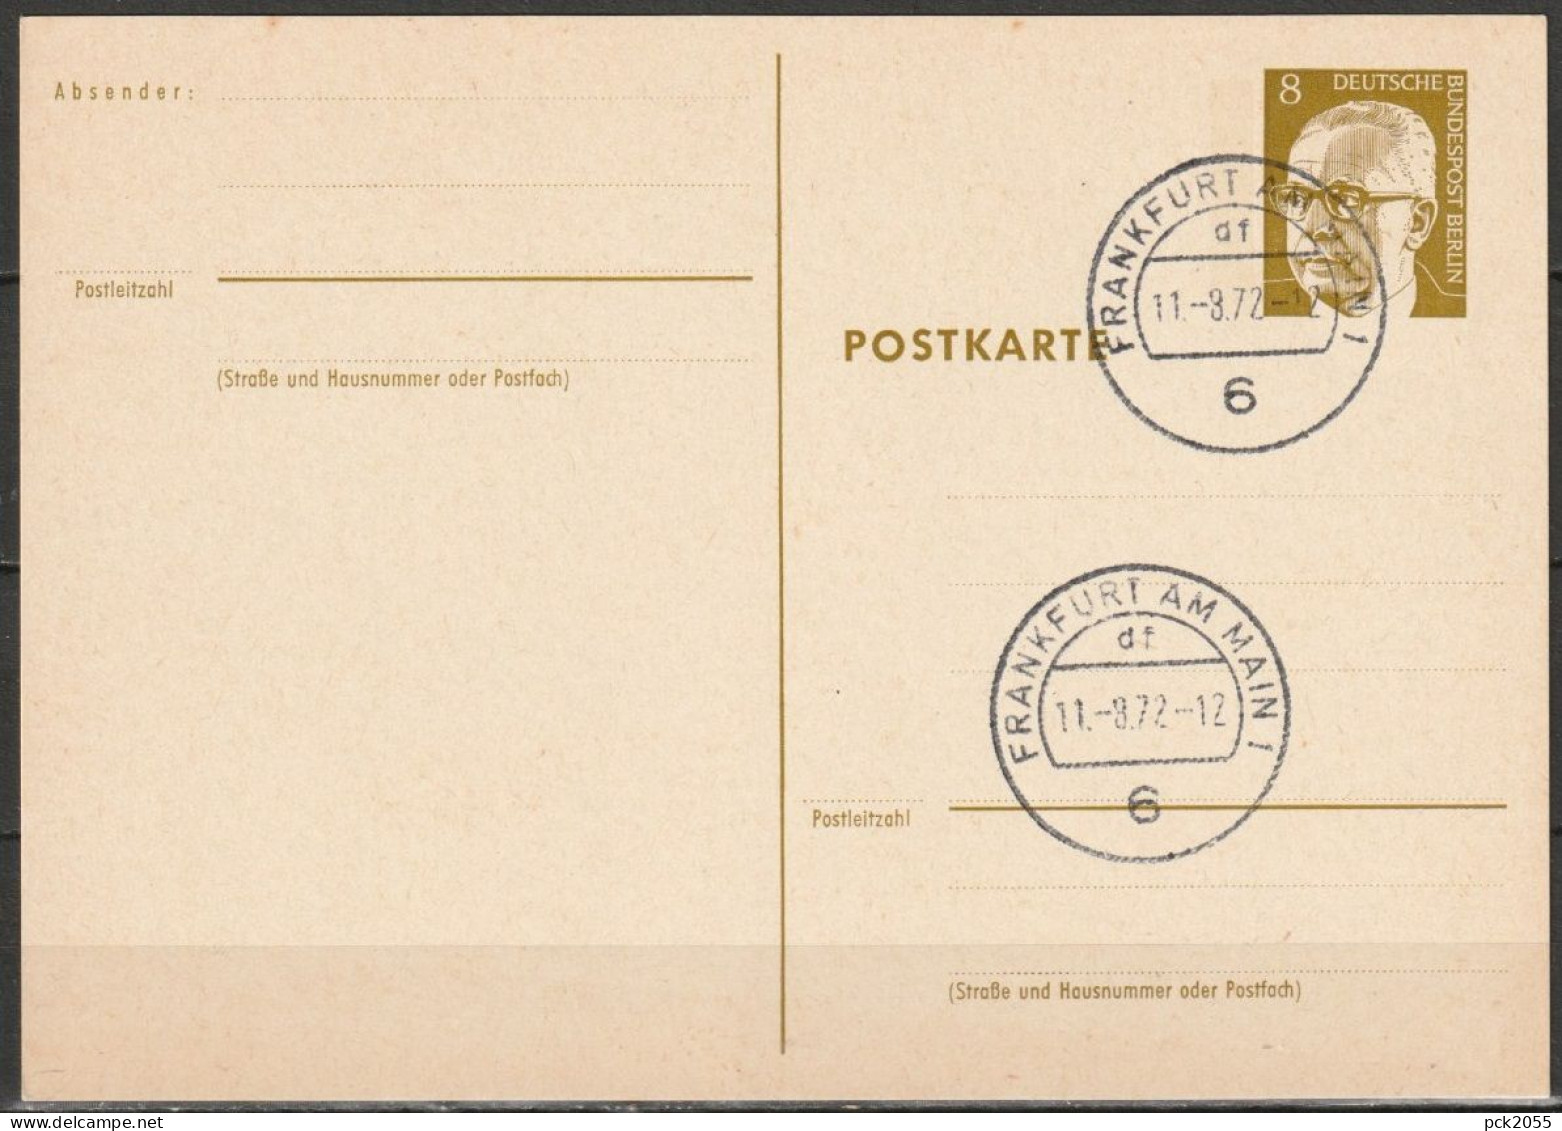 Berlin Ganzsache 1971/72 Mi.-Nr. P 80 Tagesstempel FRANKFURT 11.8.72  ( PK 392 ) - Postcards - Used